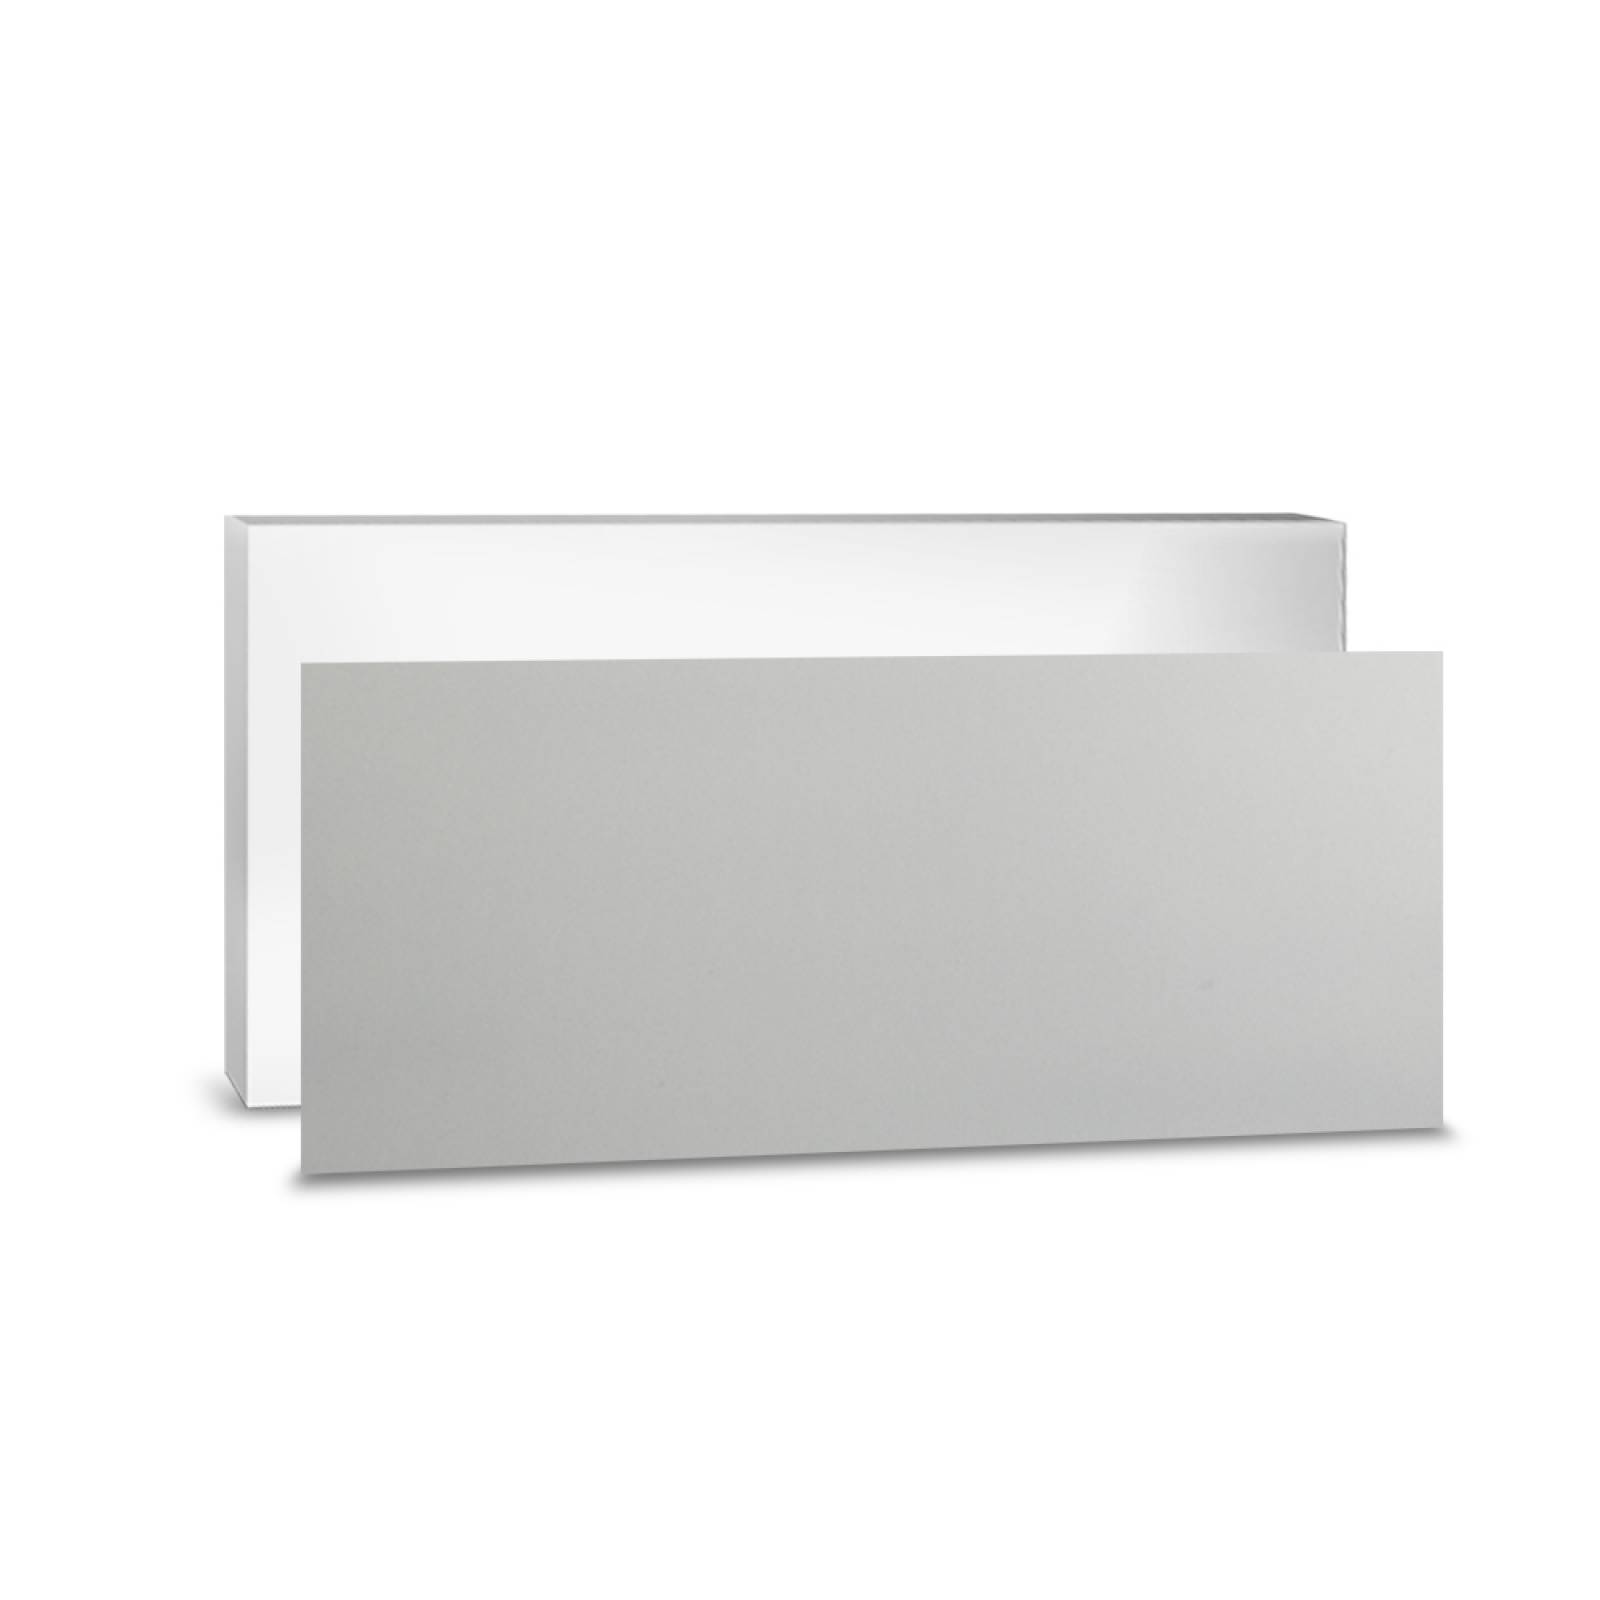 Aislante Cerámico Protector Térmico para Techo de 60 x 25 cm Blanco, Mod: 1PTTBl